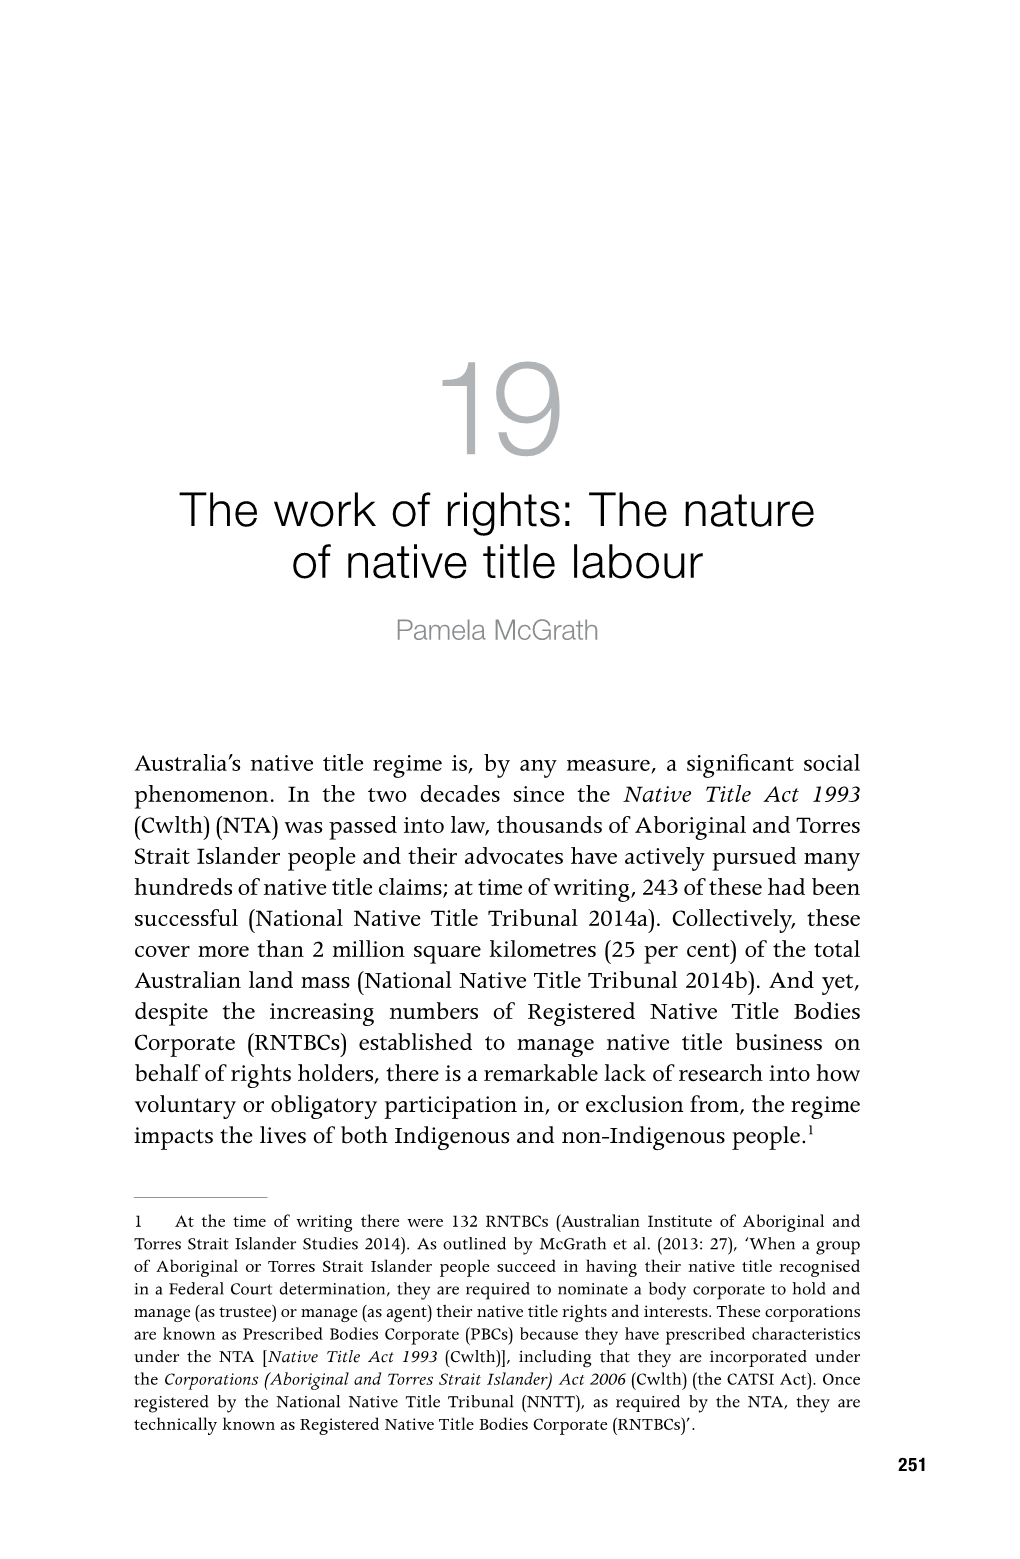 The Nature of Native Title Labour Pamela Mcgrath